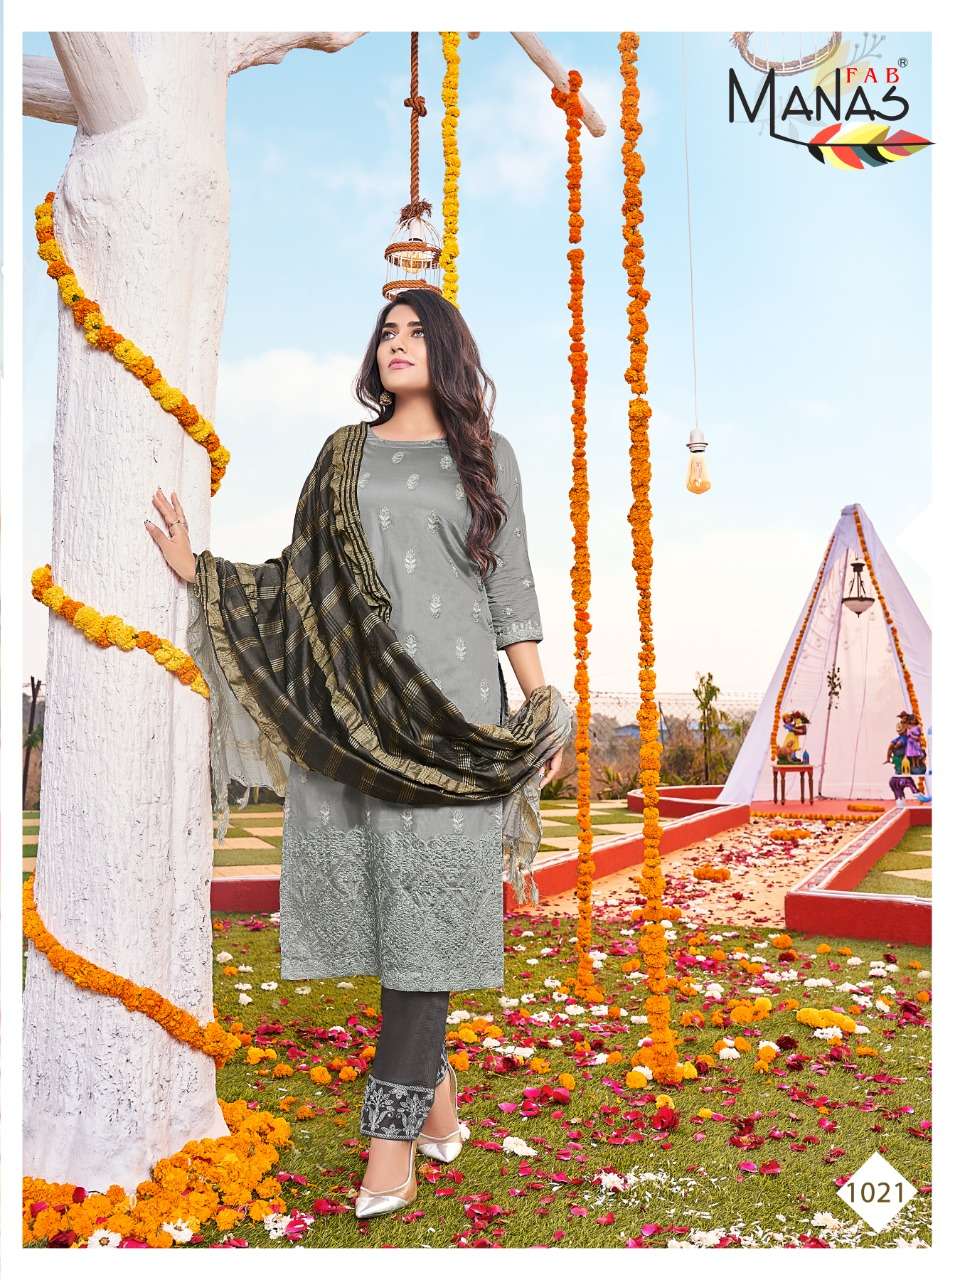 Manas Lucknowi  vol 4  catalog  Designer Festive Wear Readymade Top Bottom with Dupatta 